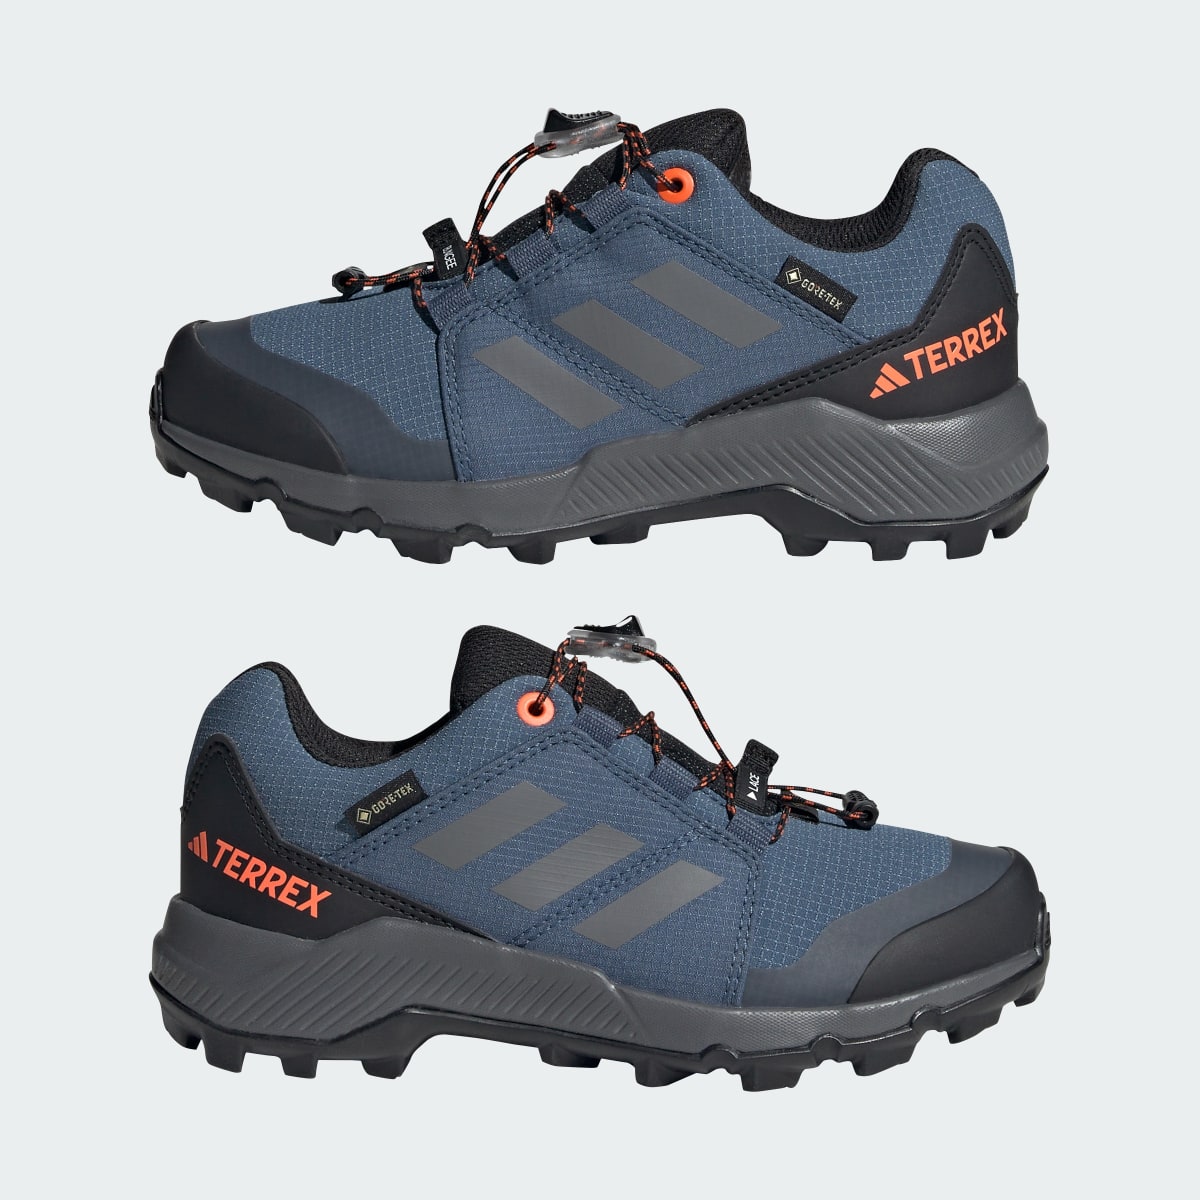 Adidas Terrex GORE-TEX Hiking Shoes. 9